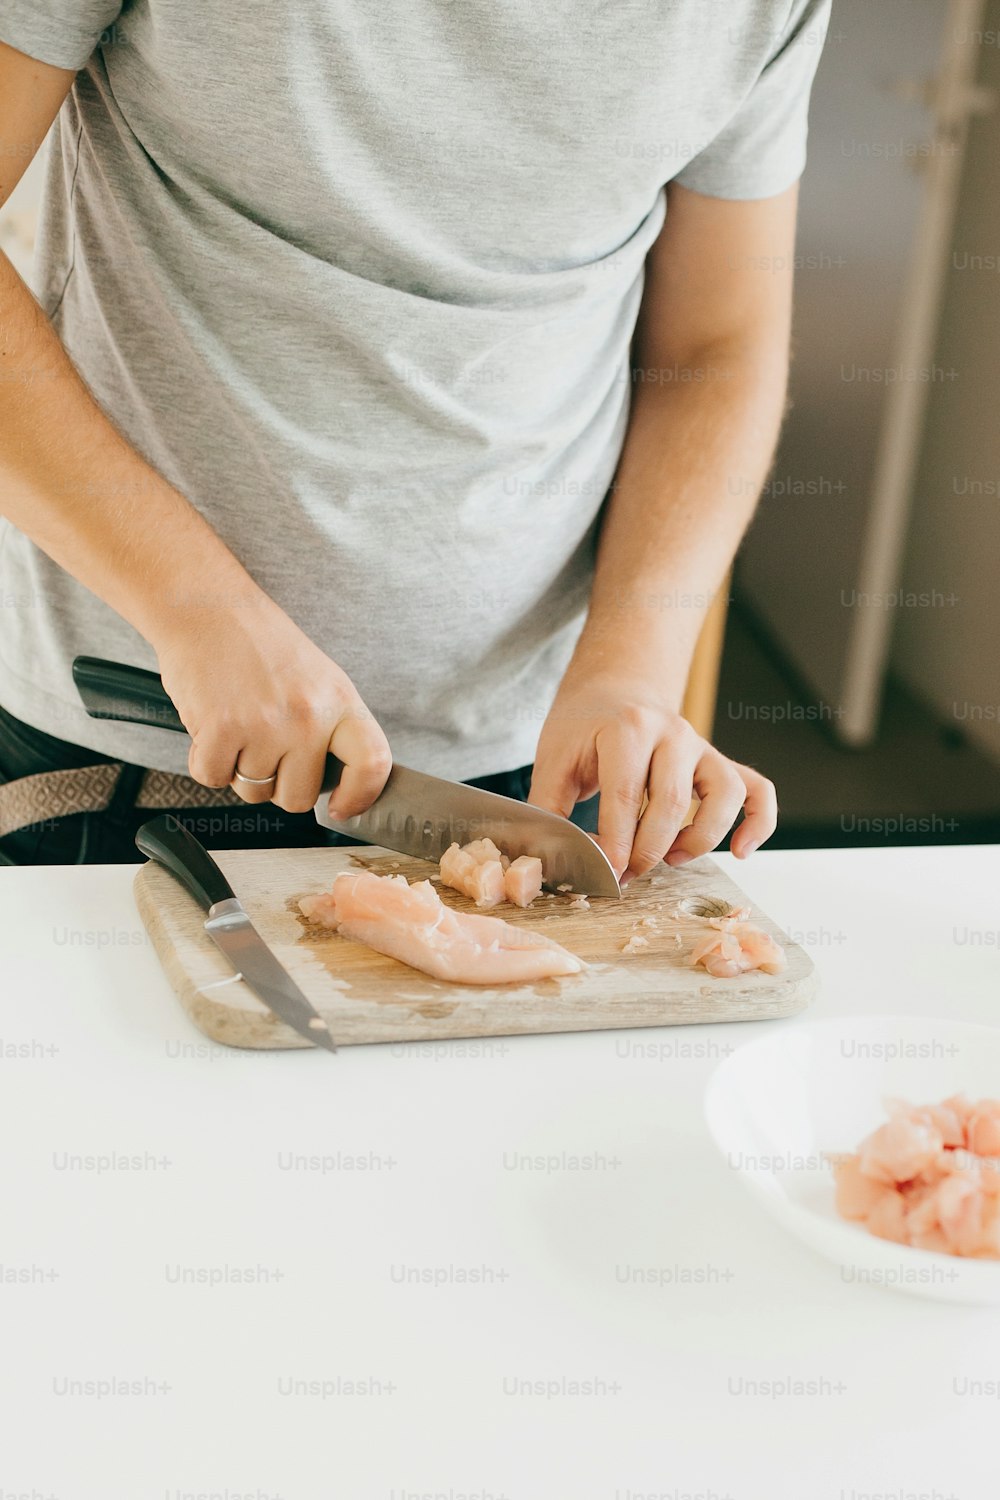 Persona cortando filete de pollo con cuchillo sobre tabla de madera en cocina blanca moderna. Proceso de elaboración de pizza casera, con las manos en alto. Concepto de cocina casera